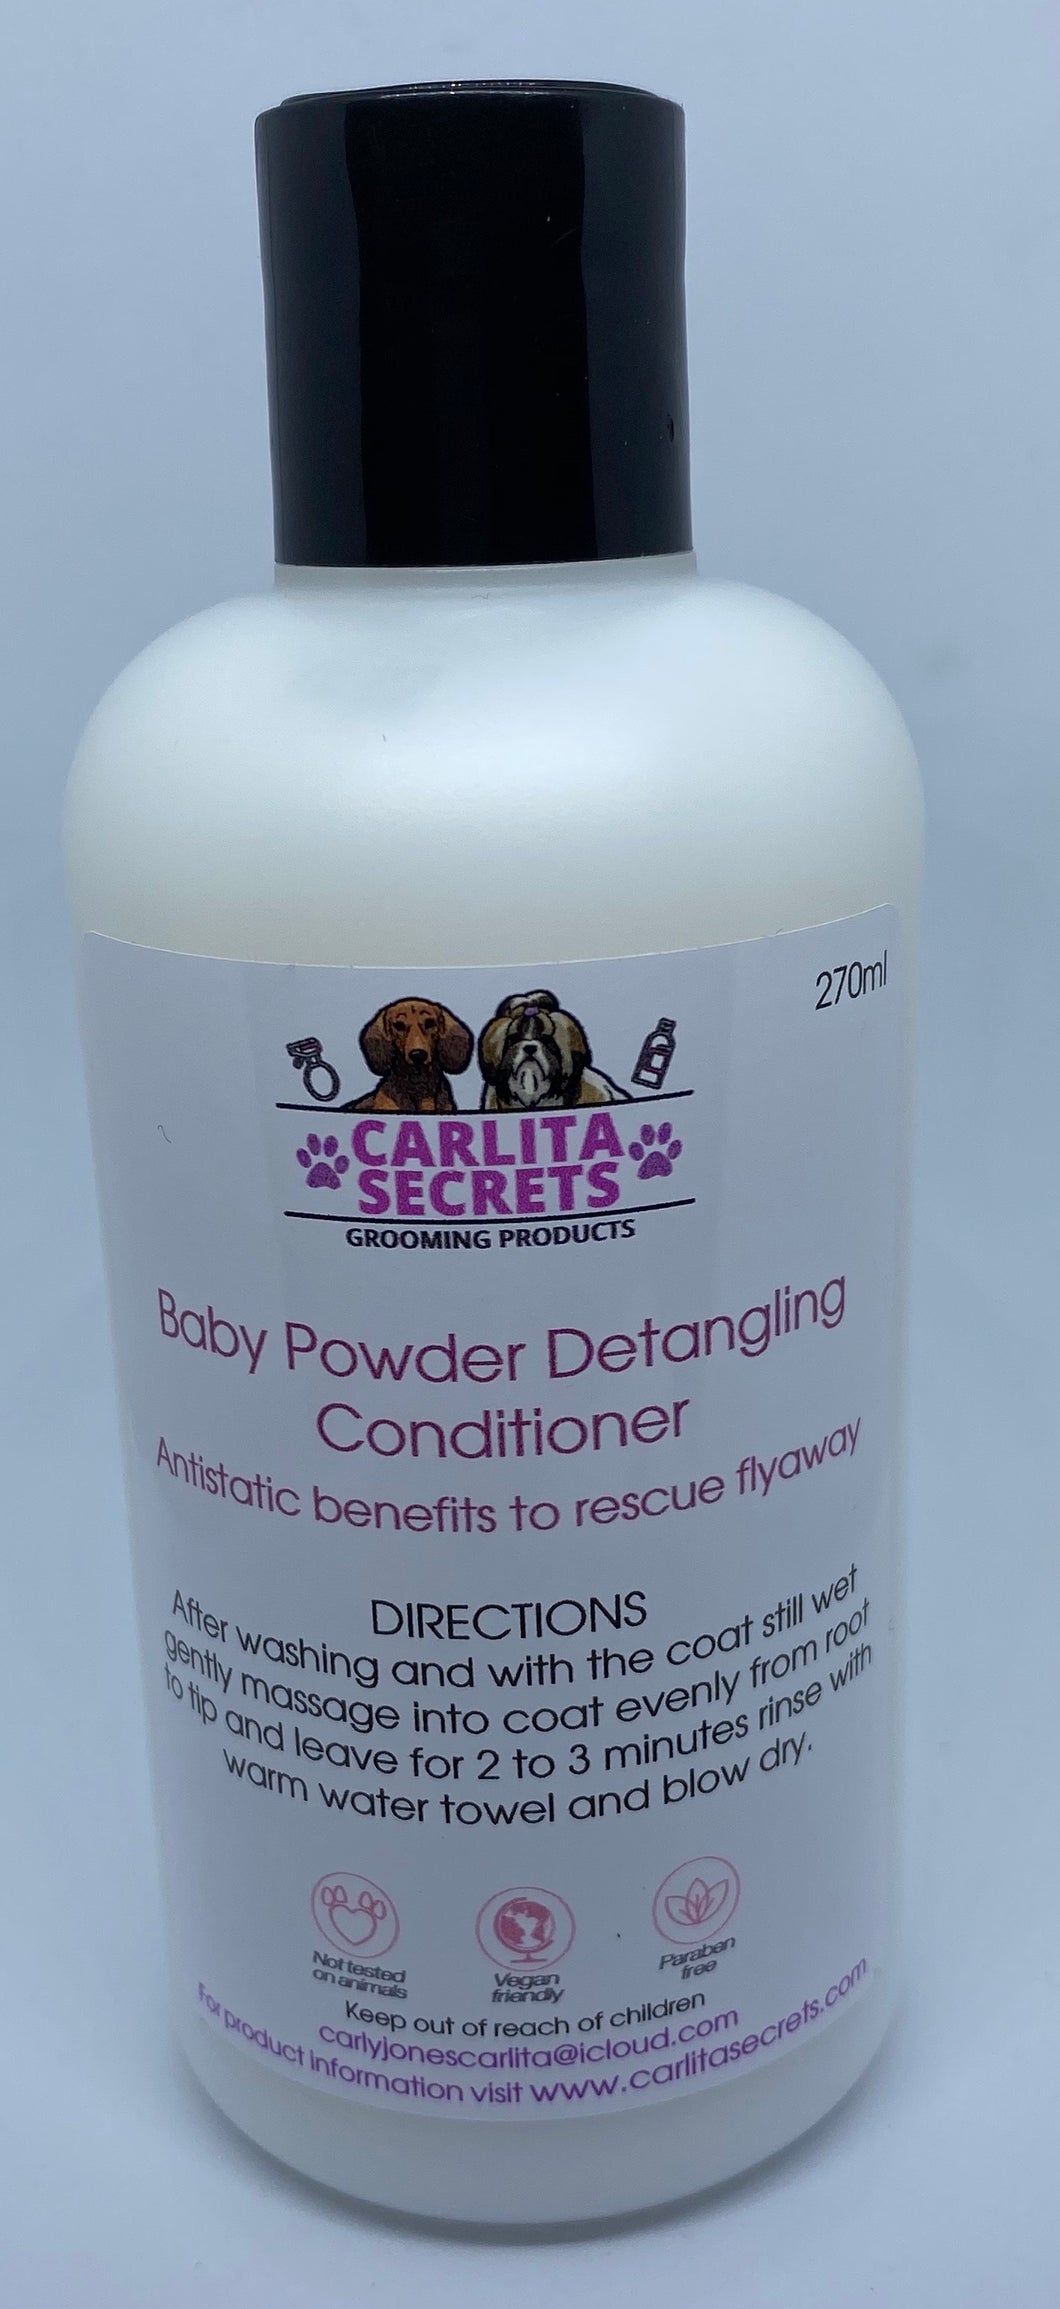 Baby Powder Detangling Conditioner